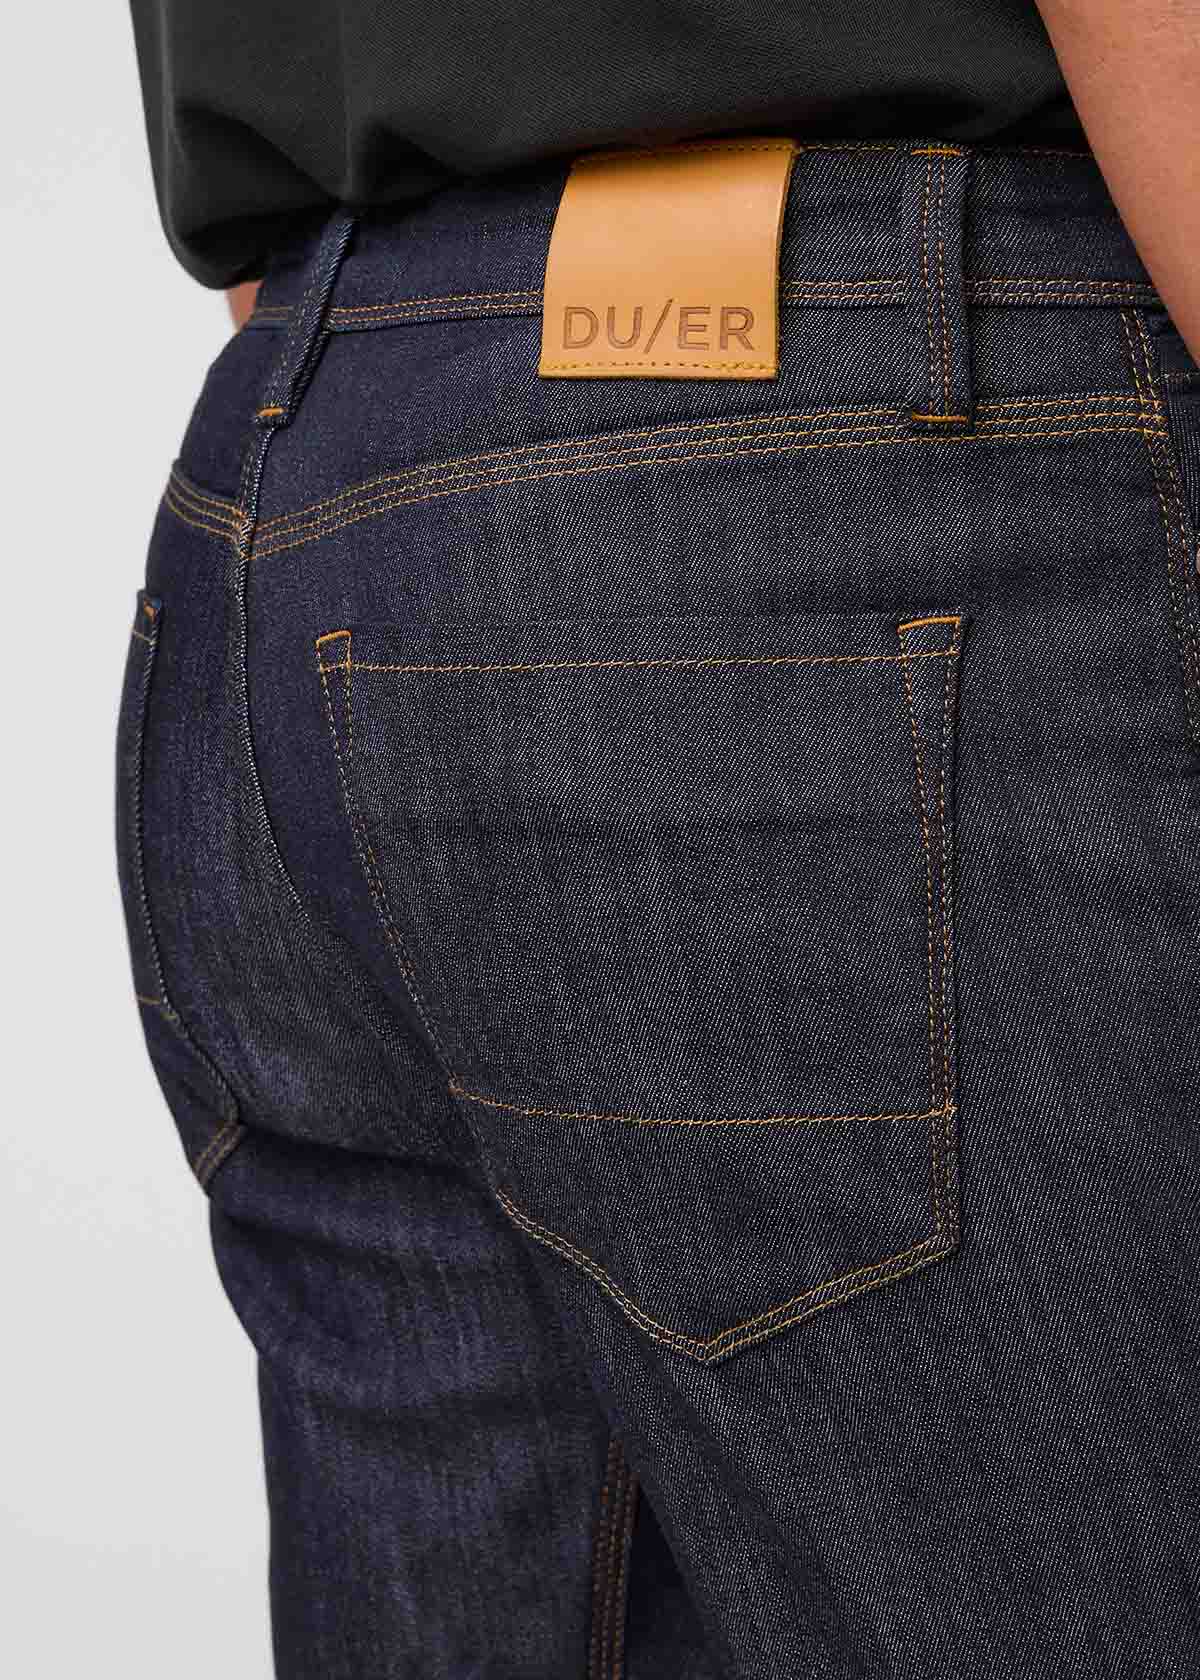 Level 7 Men's Relaxed Bootcut Dark Vintage Jean Zipper Pockets